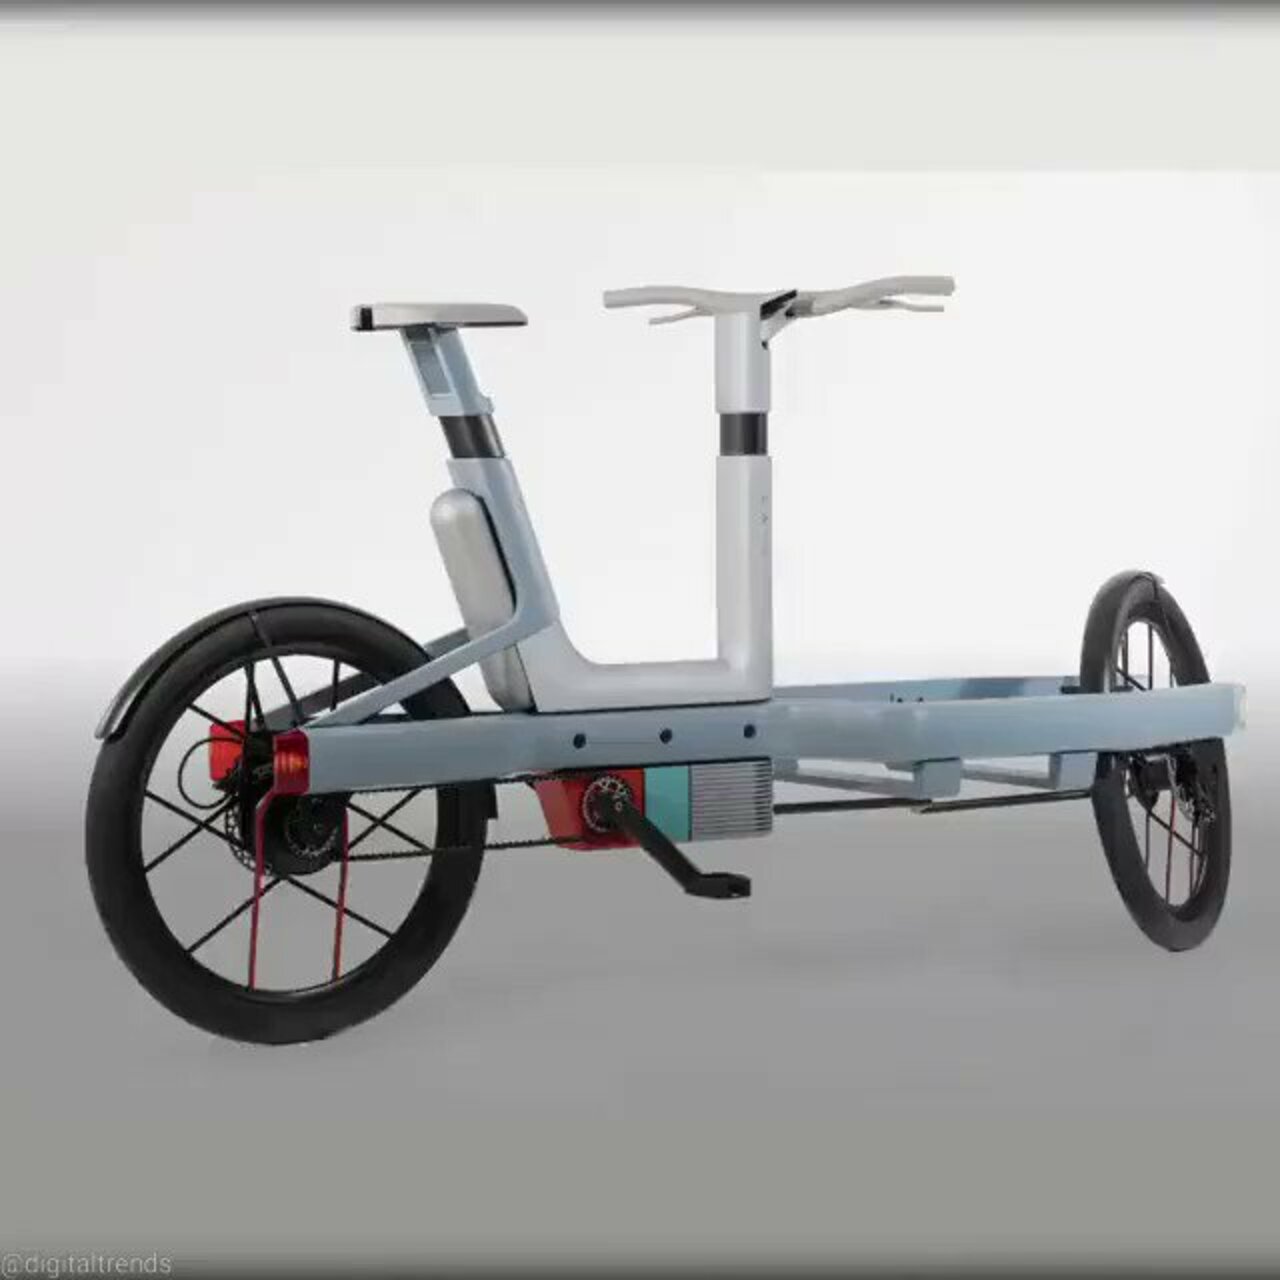 Say Hello to first hydrogen-powered e-bike by @DigitalTrends #ElectricVehicles #Sustainability #AI #EV #Technology #EmergingTech #Innovation #Automotive Cc: @maxjcm @ronald_vanloon @pascal_bornet @marcusborba https://t.co/44xGrXXhjF